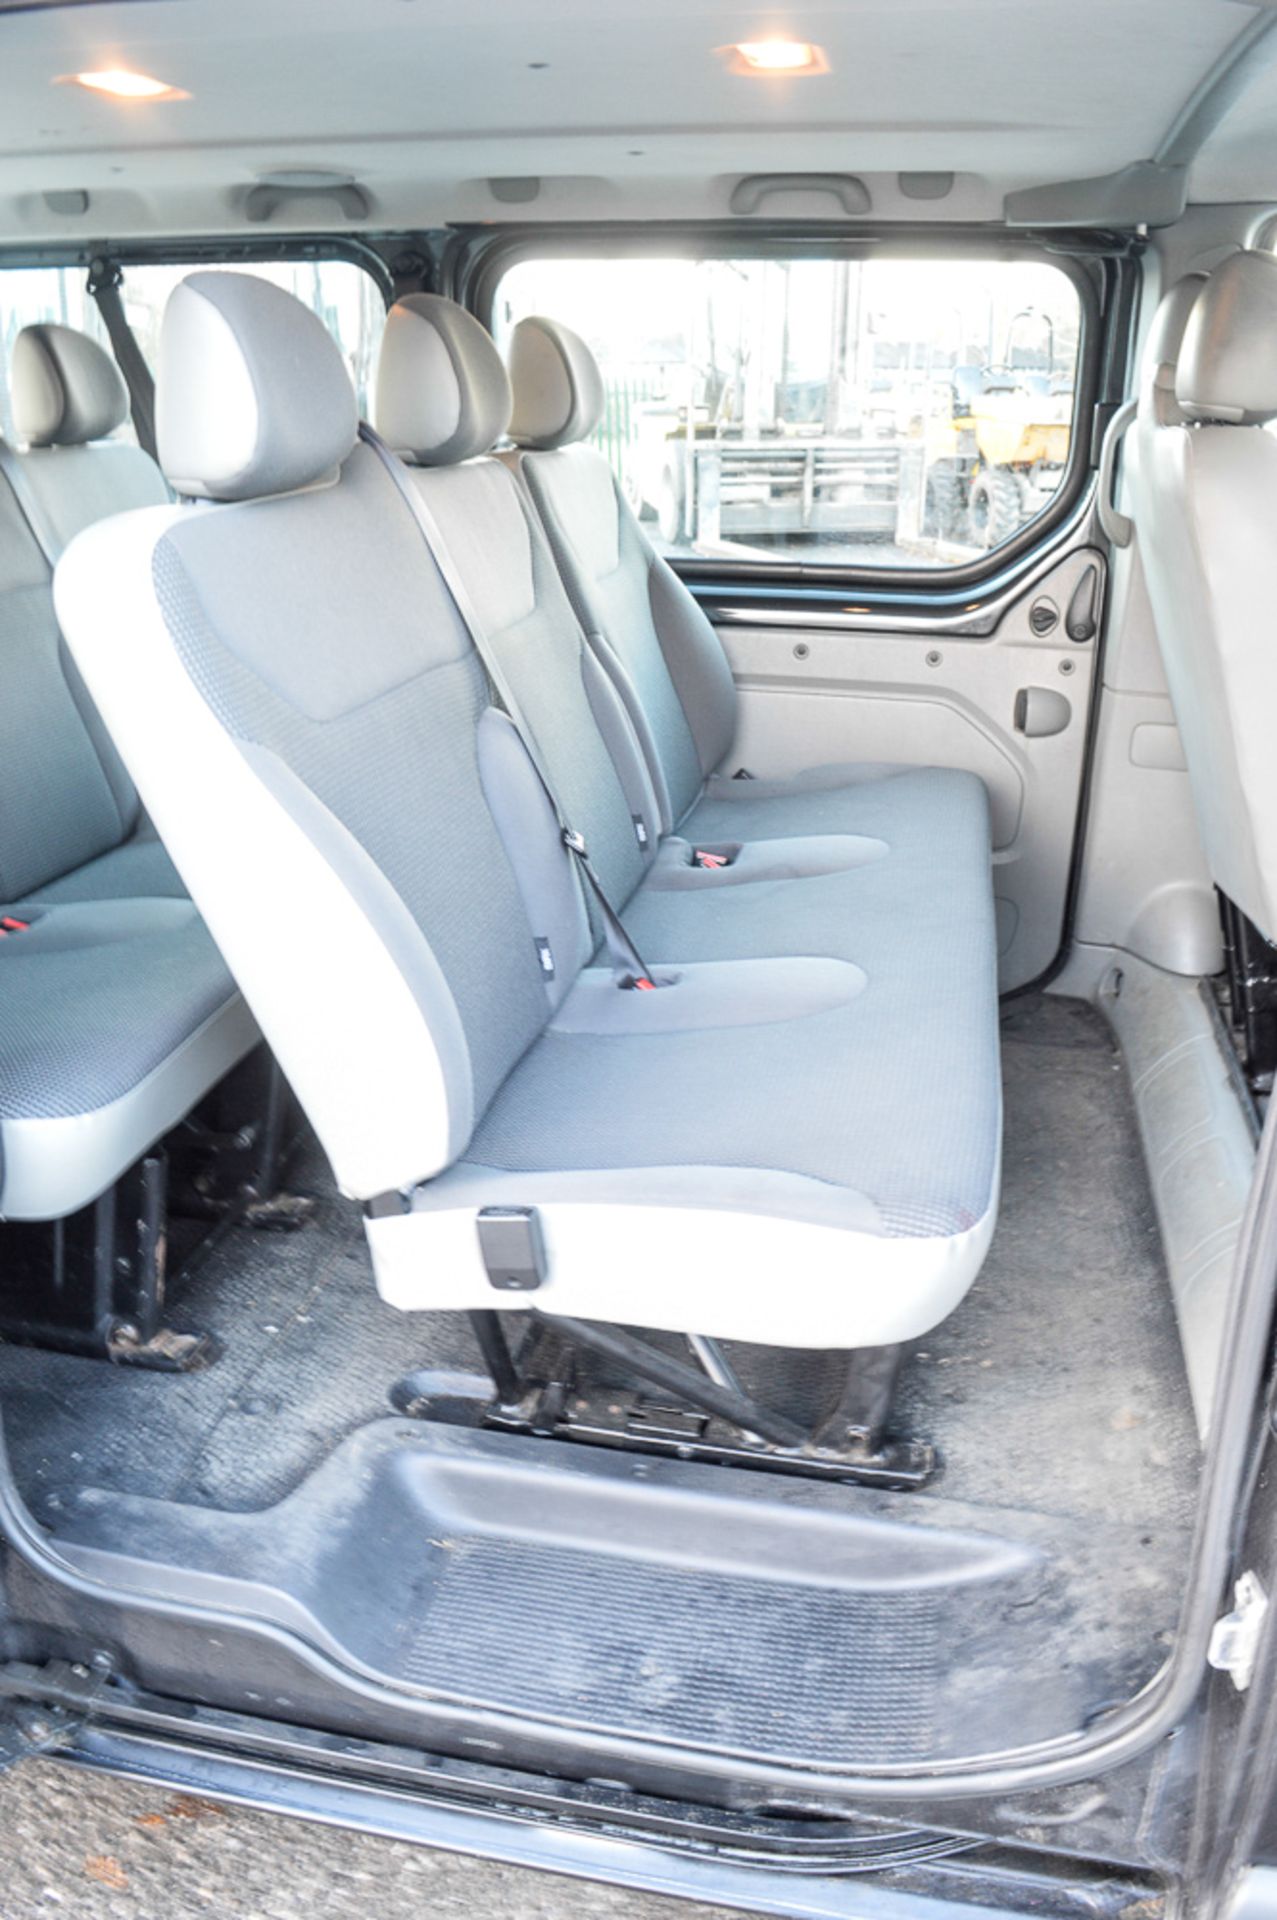 Vauxhall Vivaro CDTi 8 seat minibus Regisration Number: LS13 ULK Date of Registration:  Recorded - Image 8 of 12